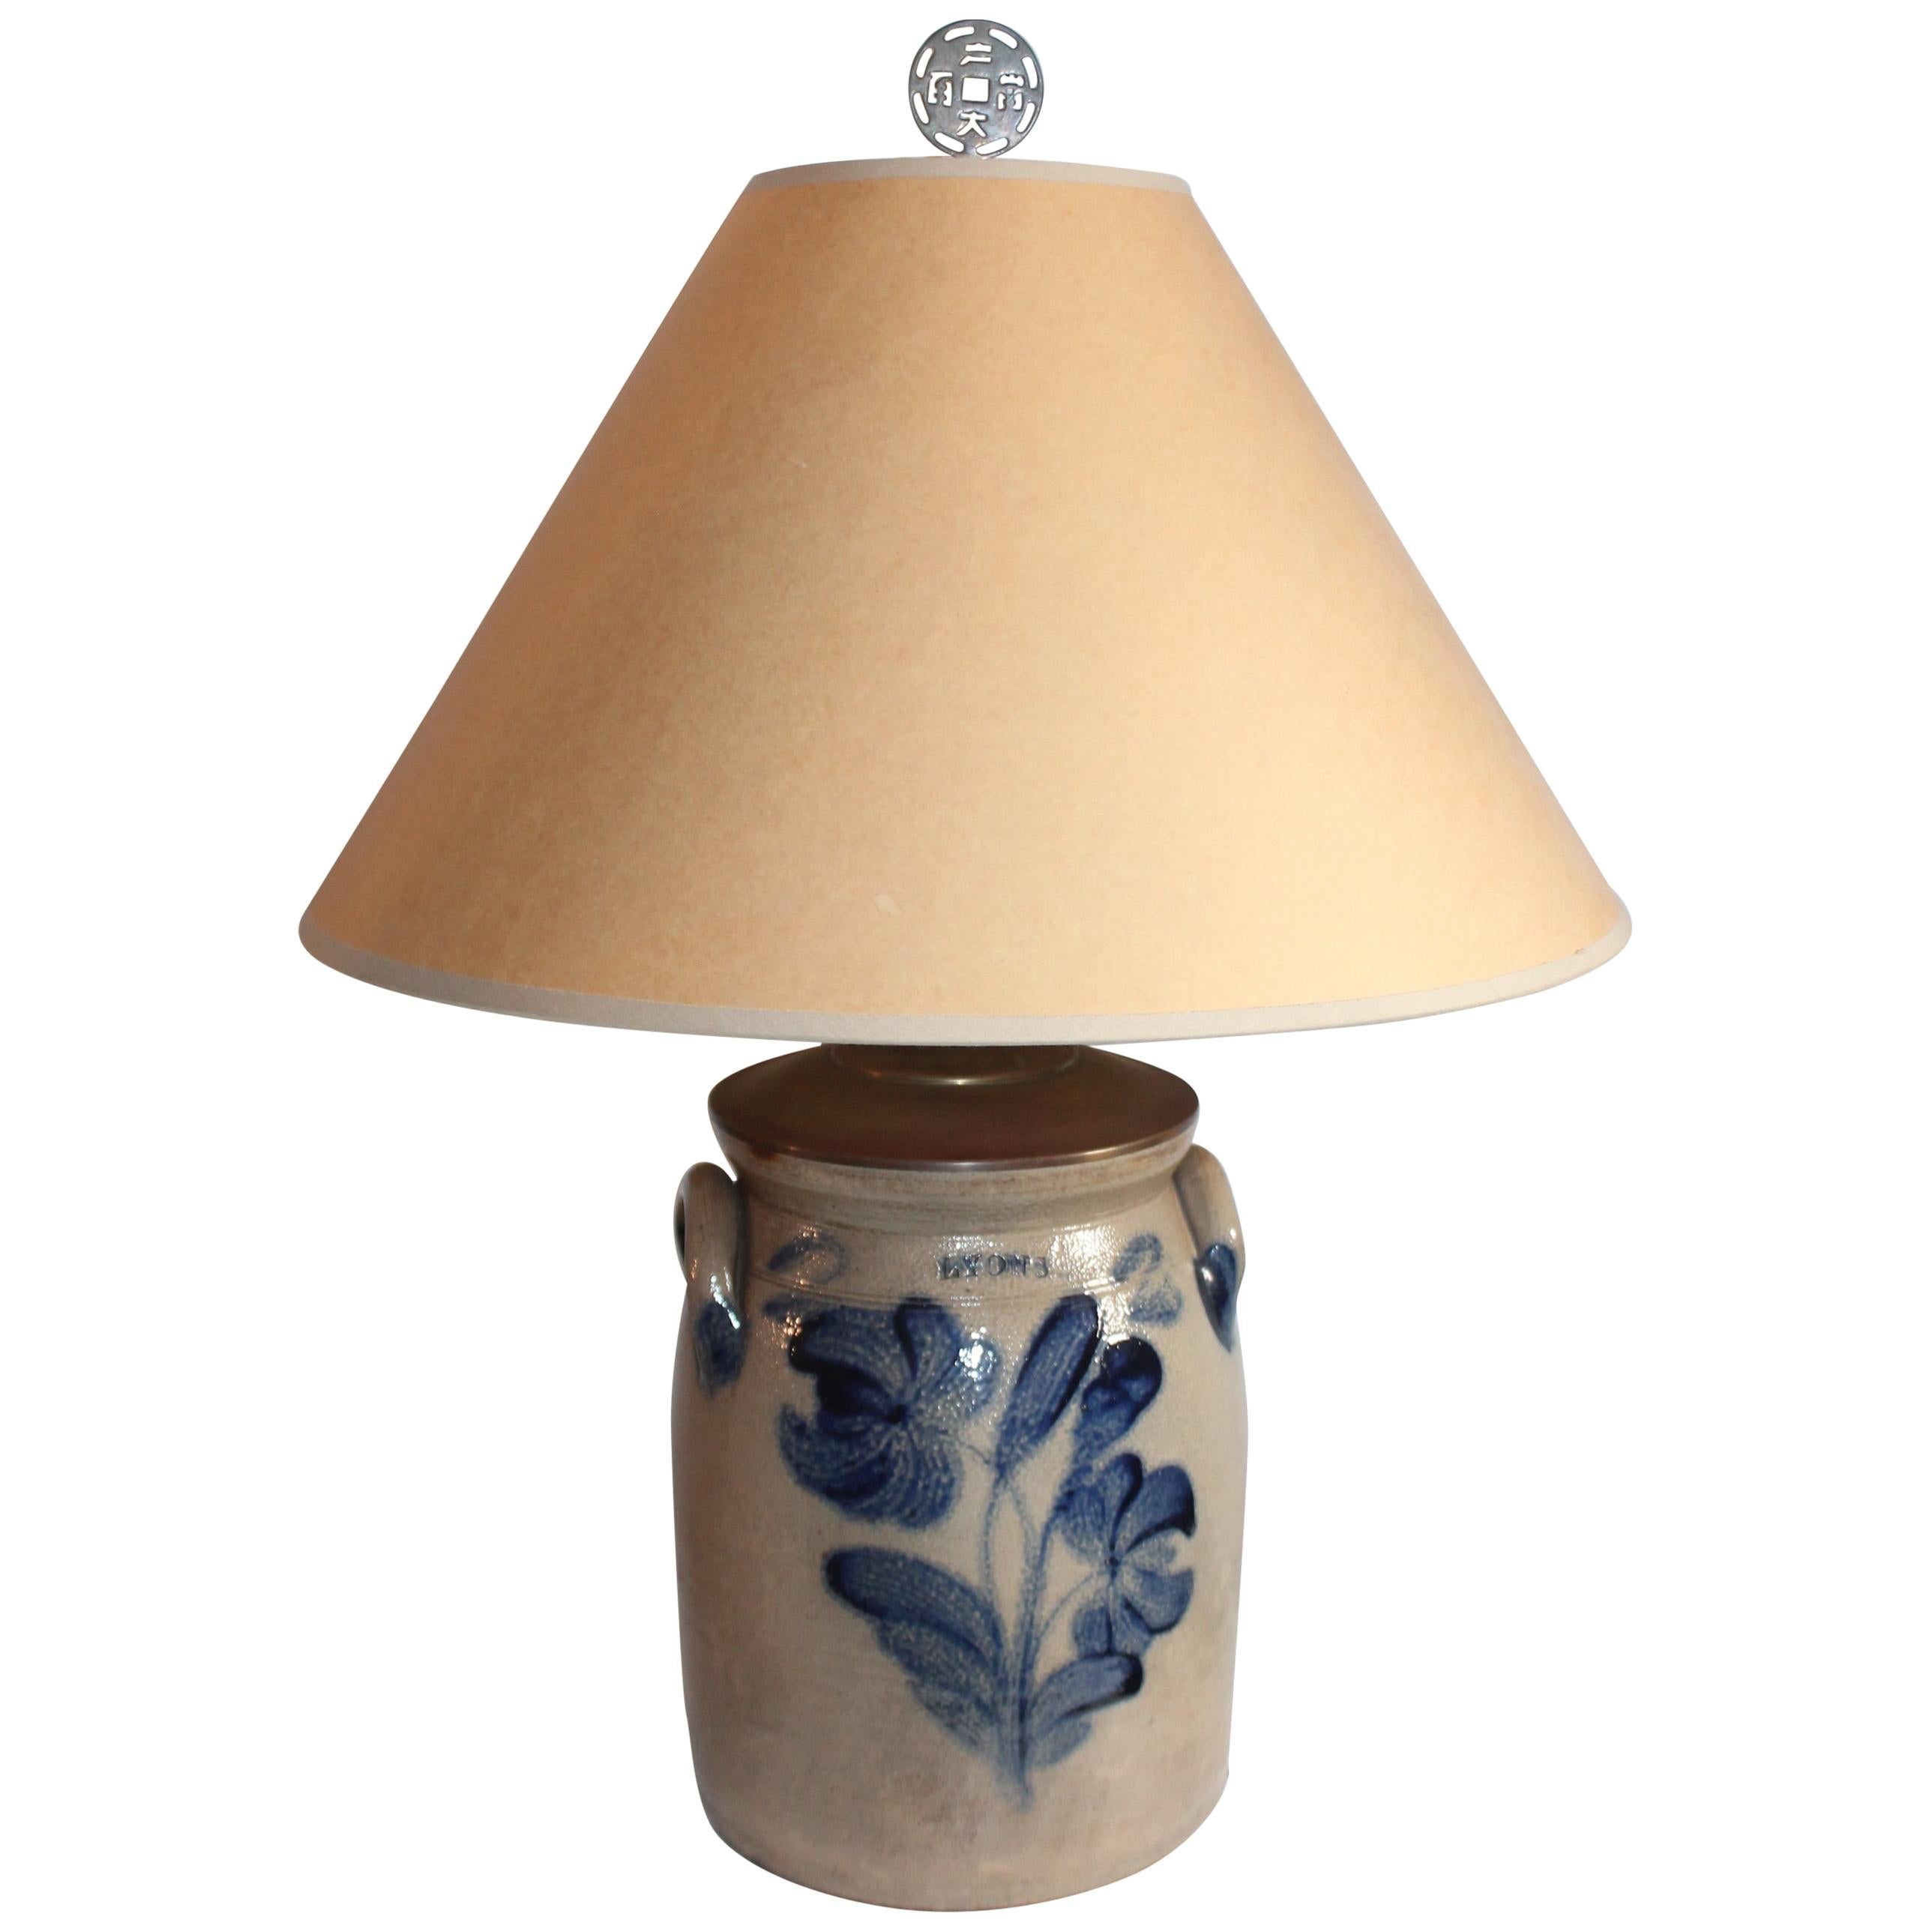 19th Century Decorated Stoneware Crock Lamp